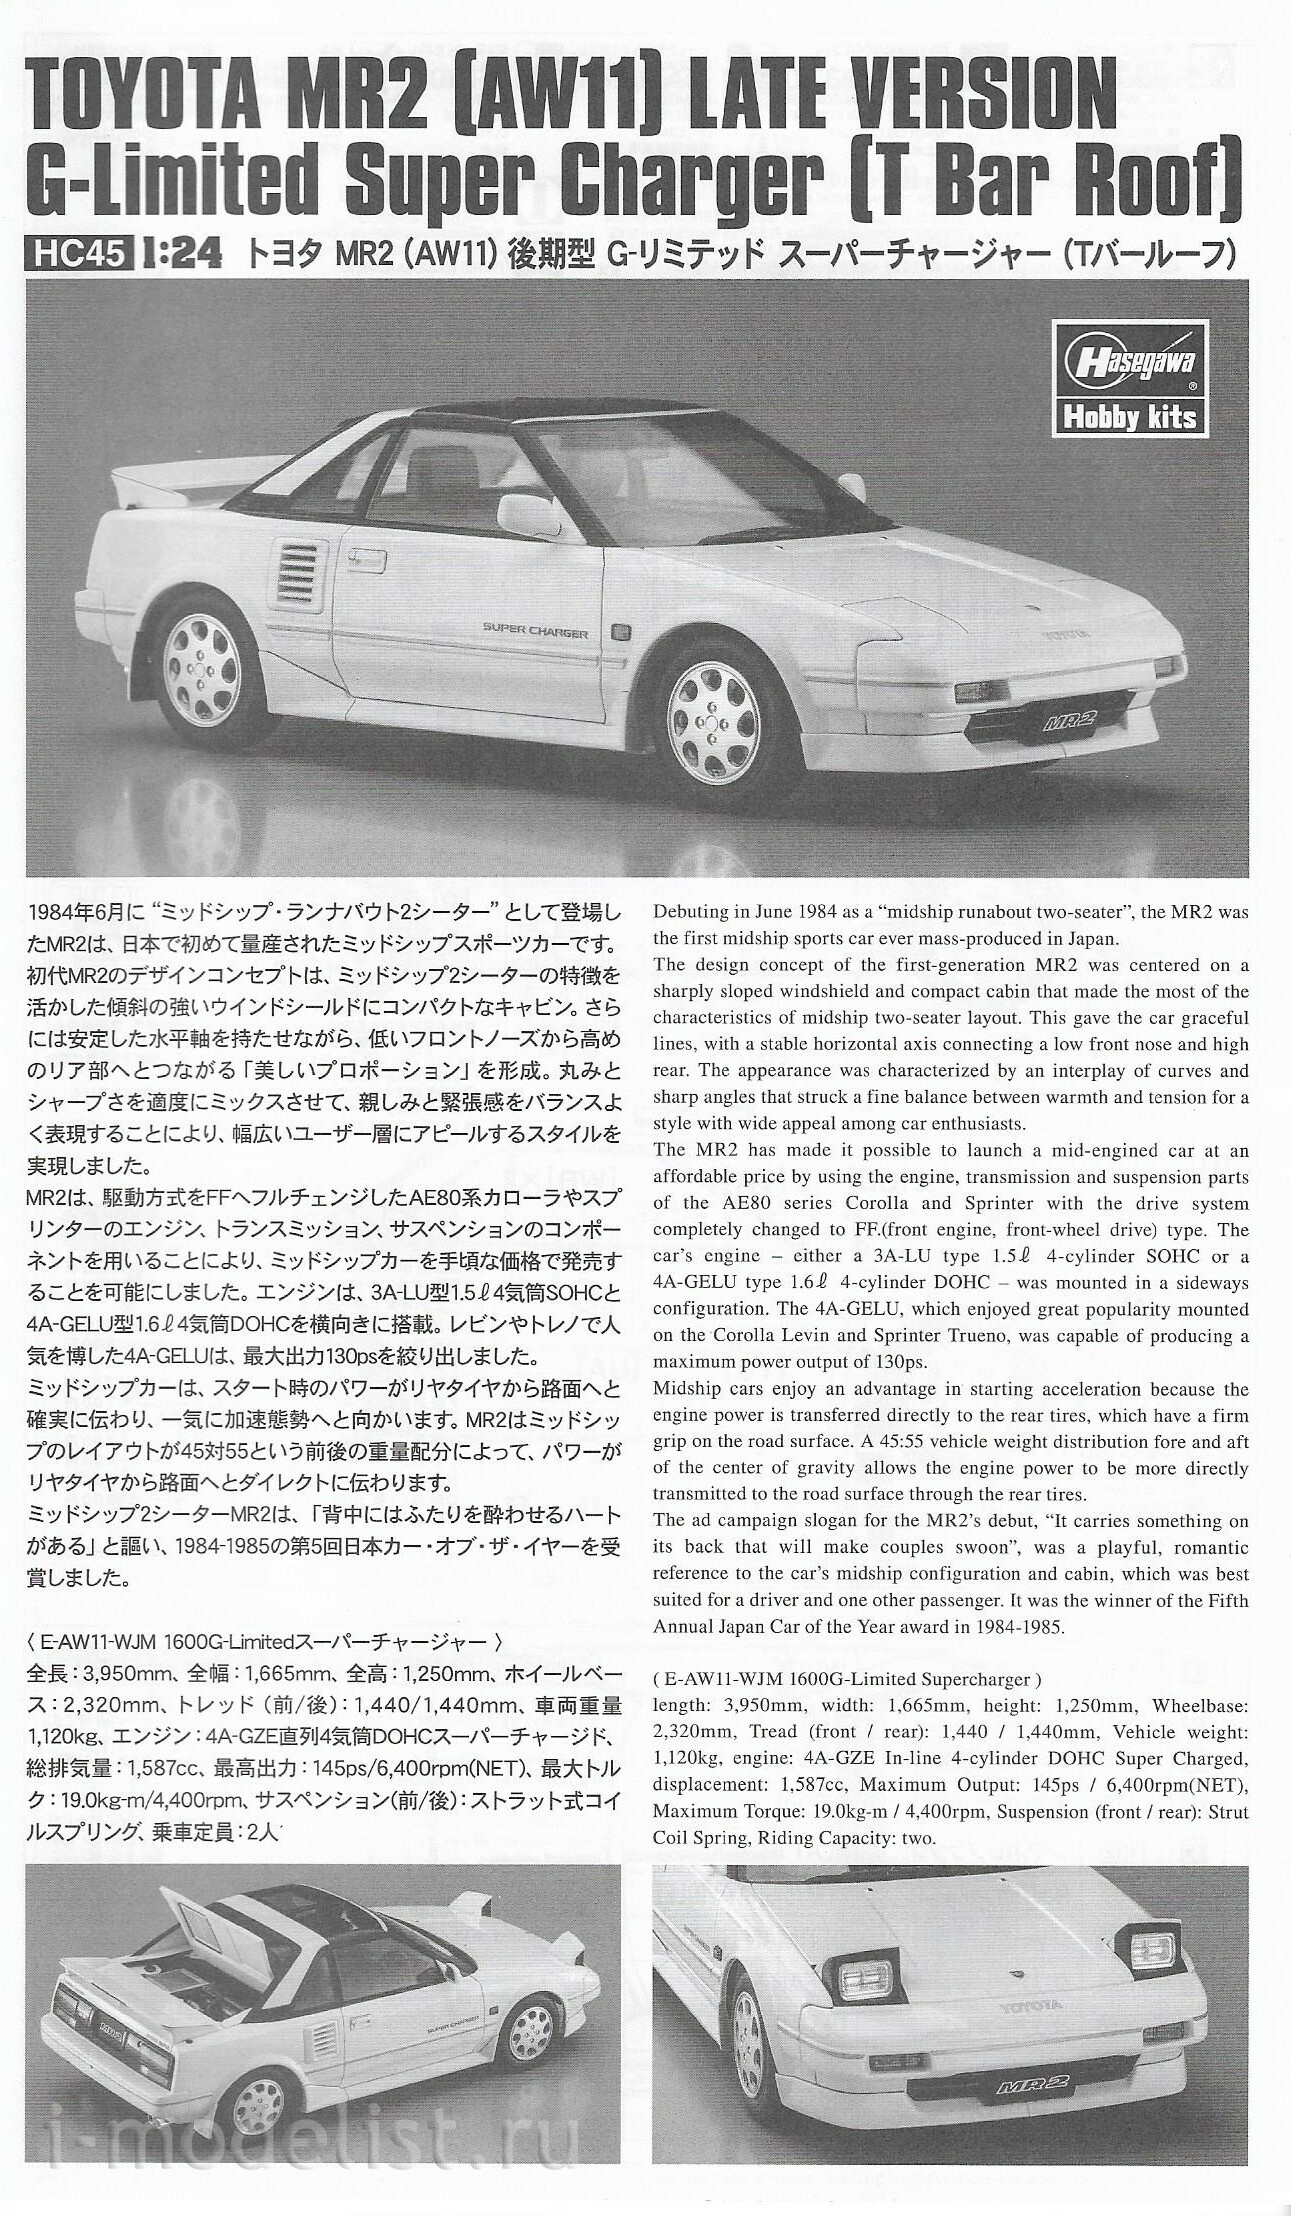 21145 Hasegawa 1/24 Автомобиль Toyota MR2 (AW11) LATE